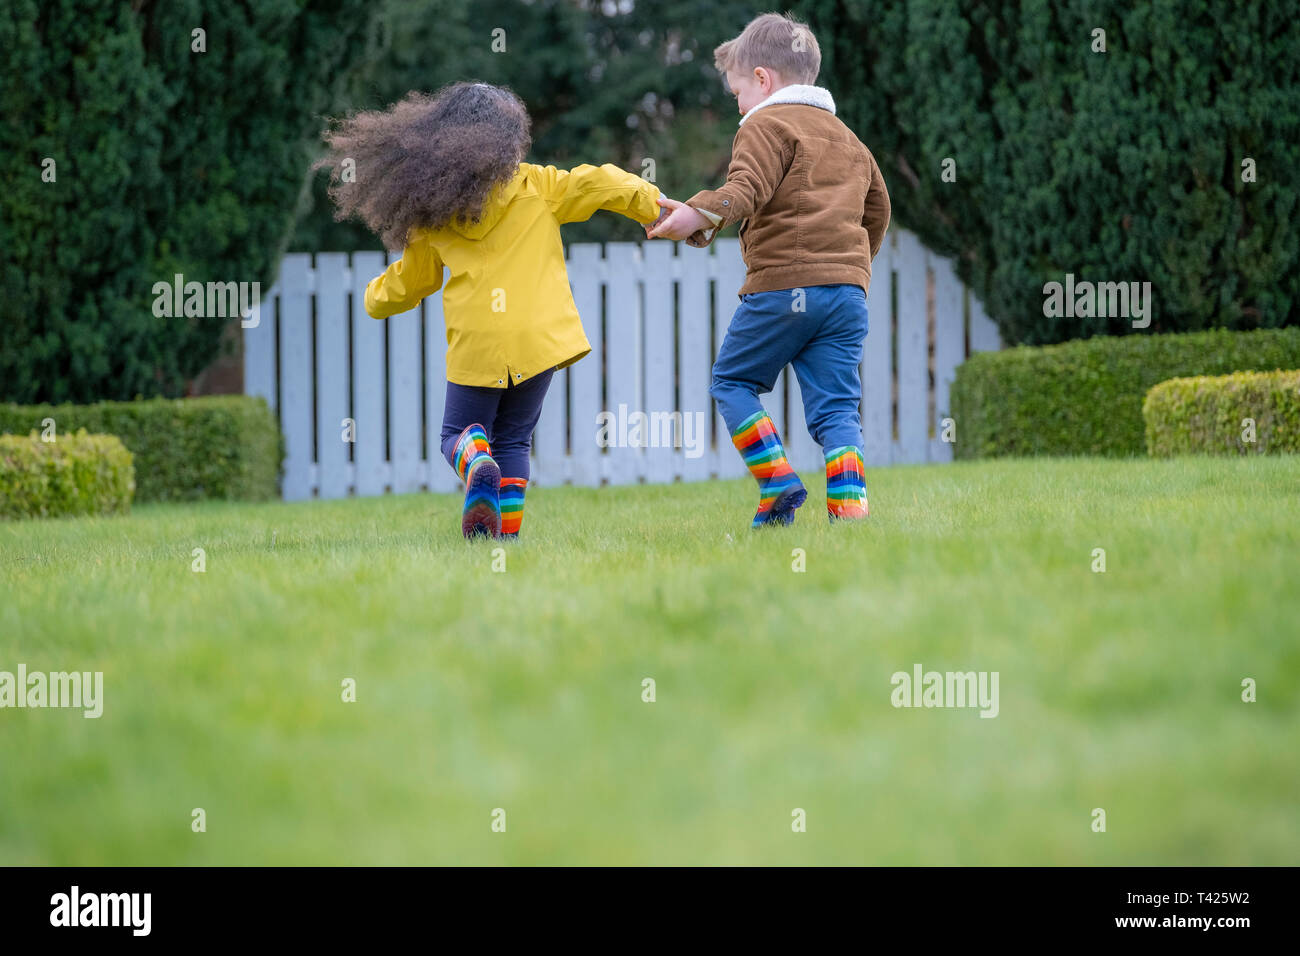 Children skipping enjoying playing outside Stock Photo